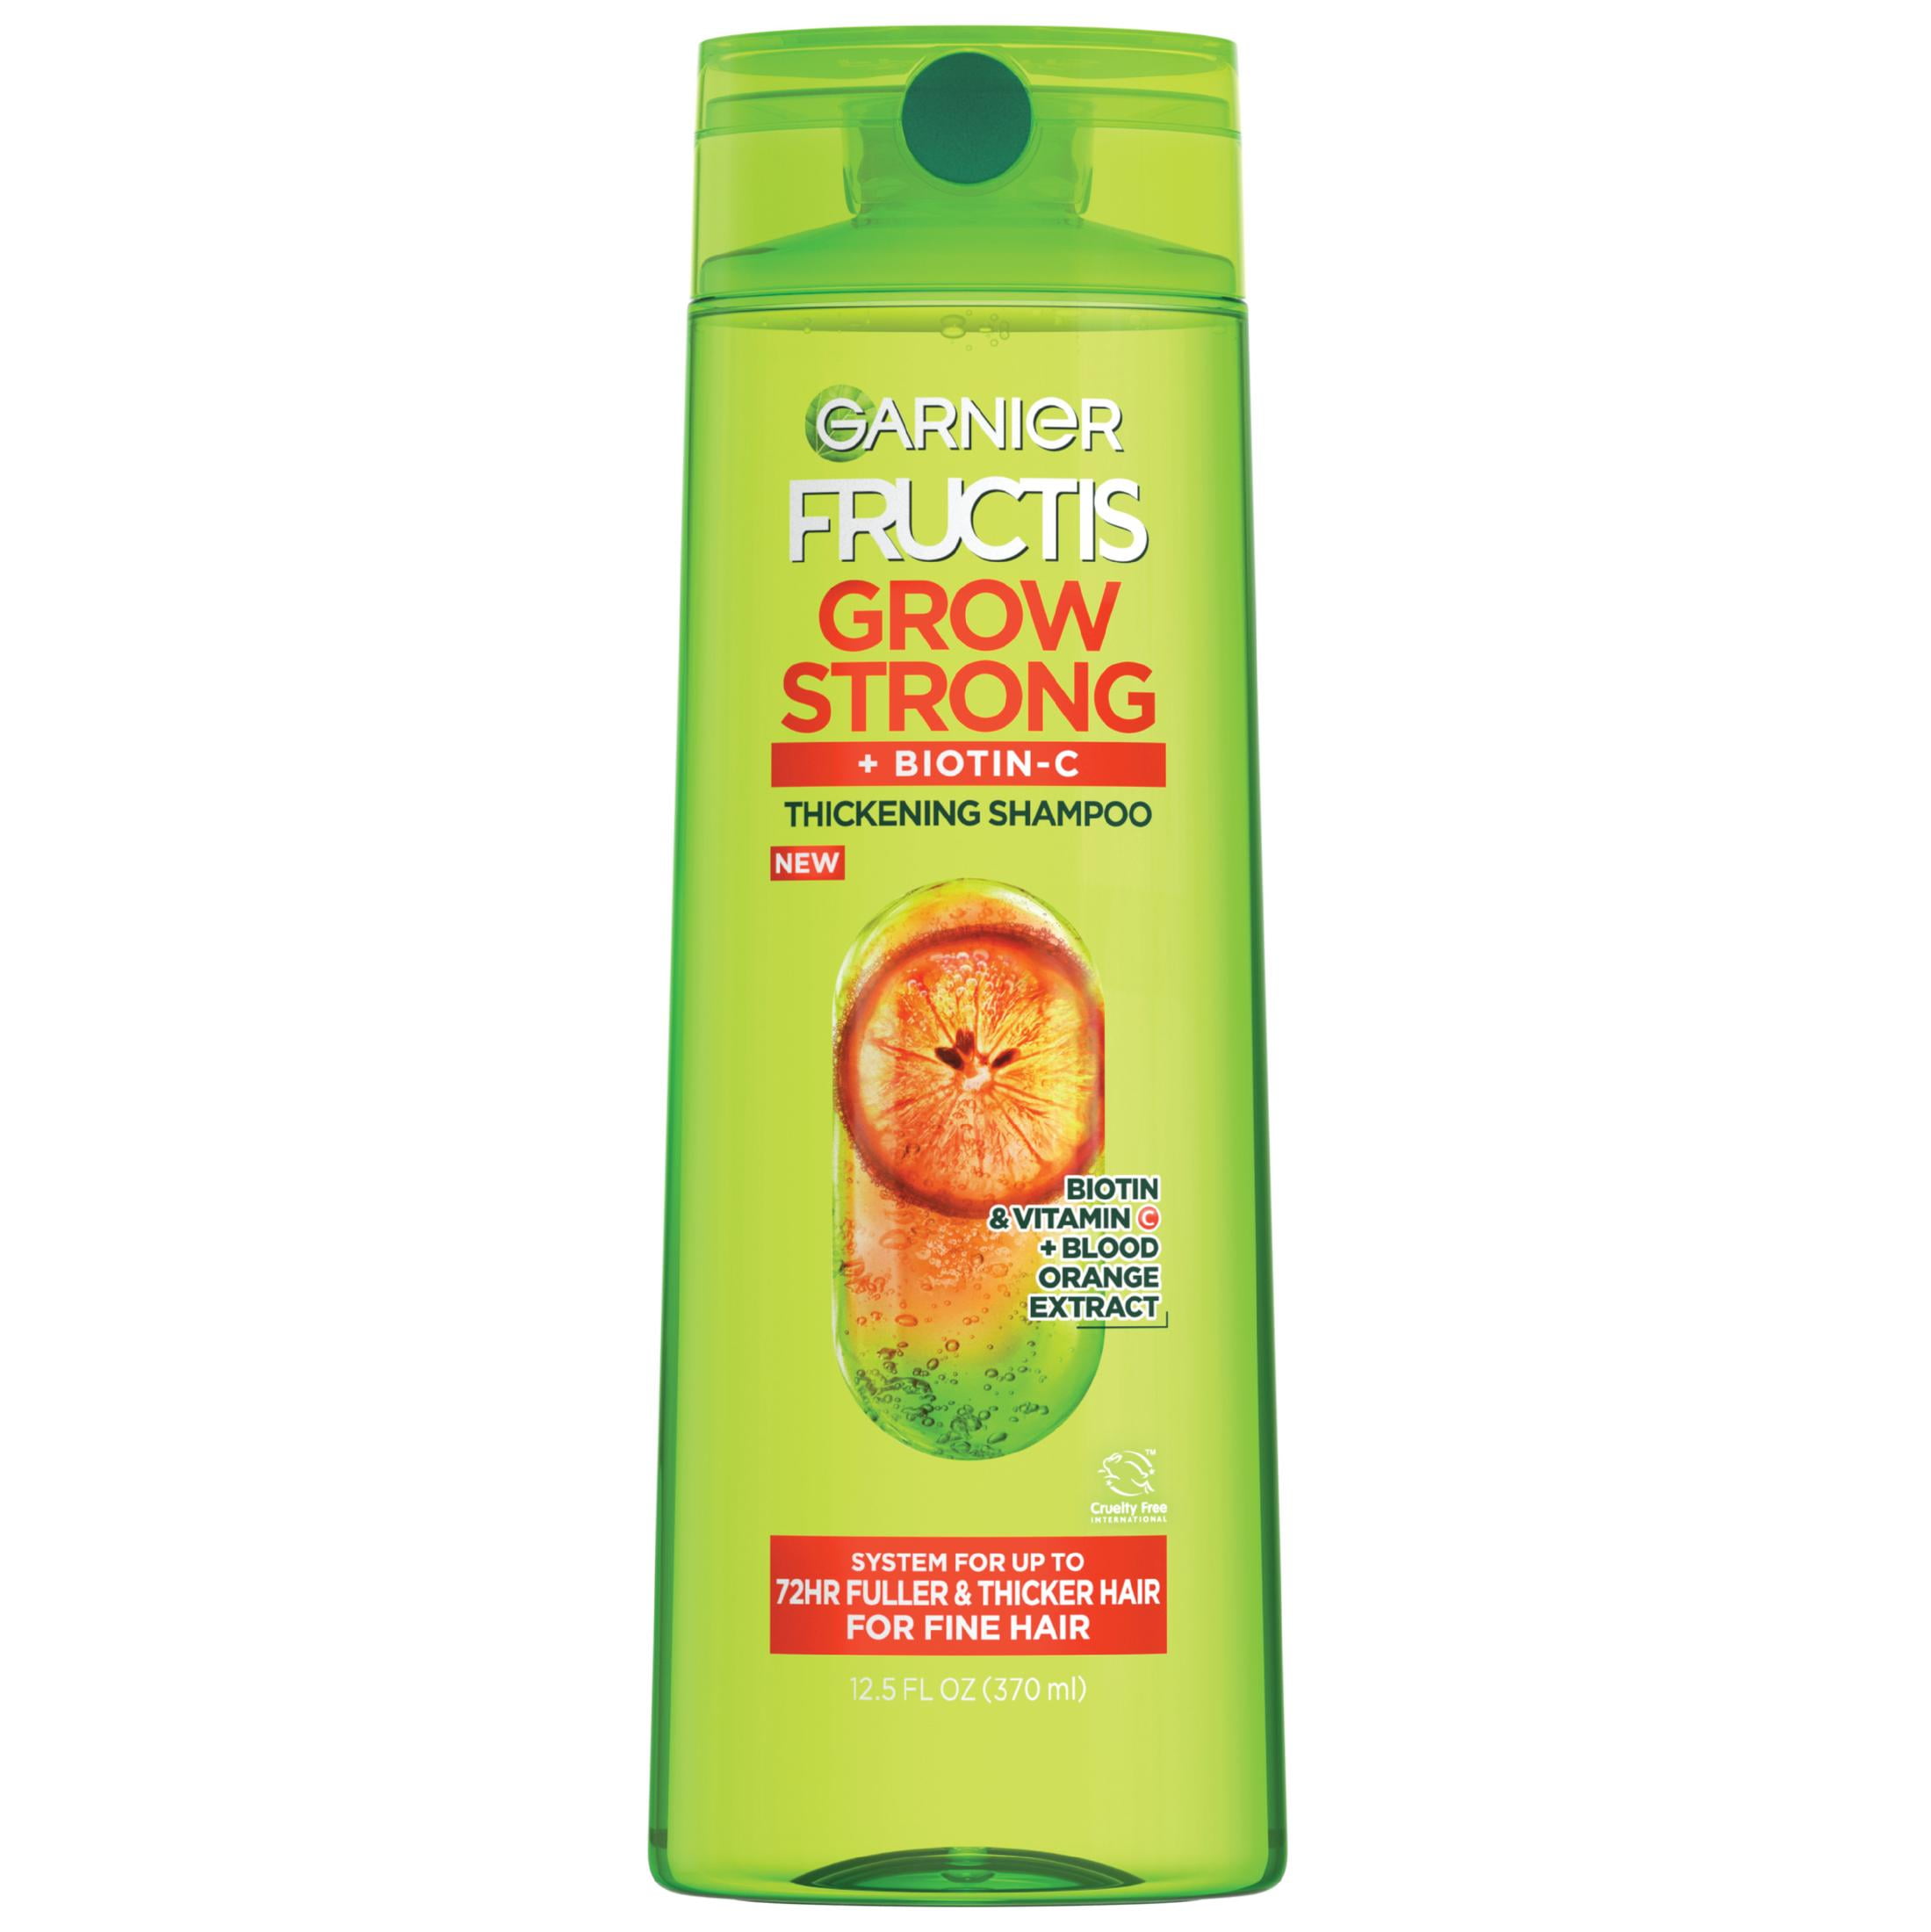 Garnier Fructis Grow Strong Thickening Shampoo with Biotin, 12.5 fl oz